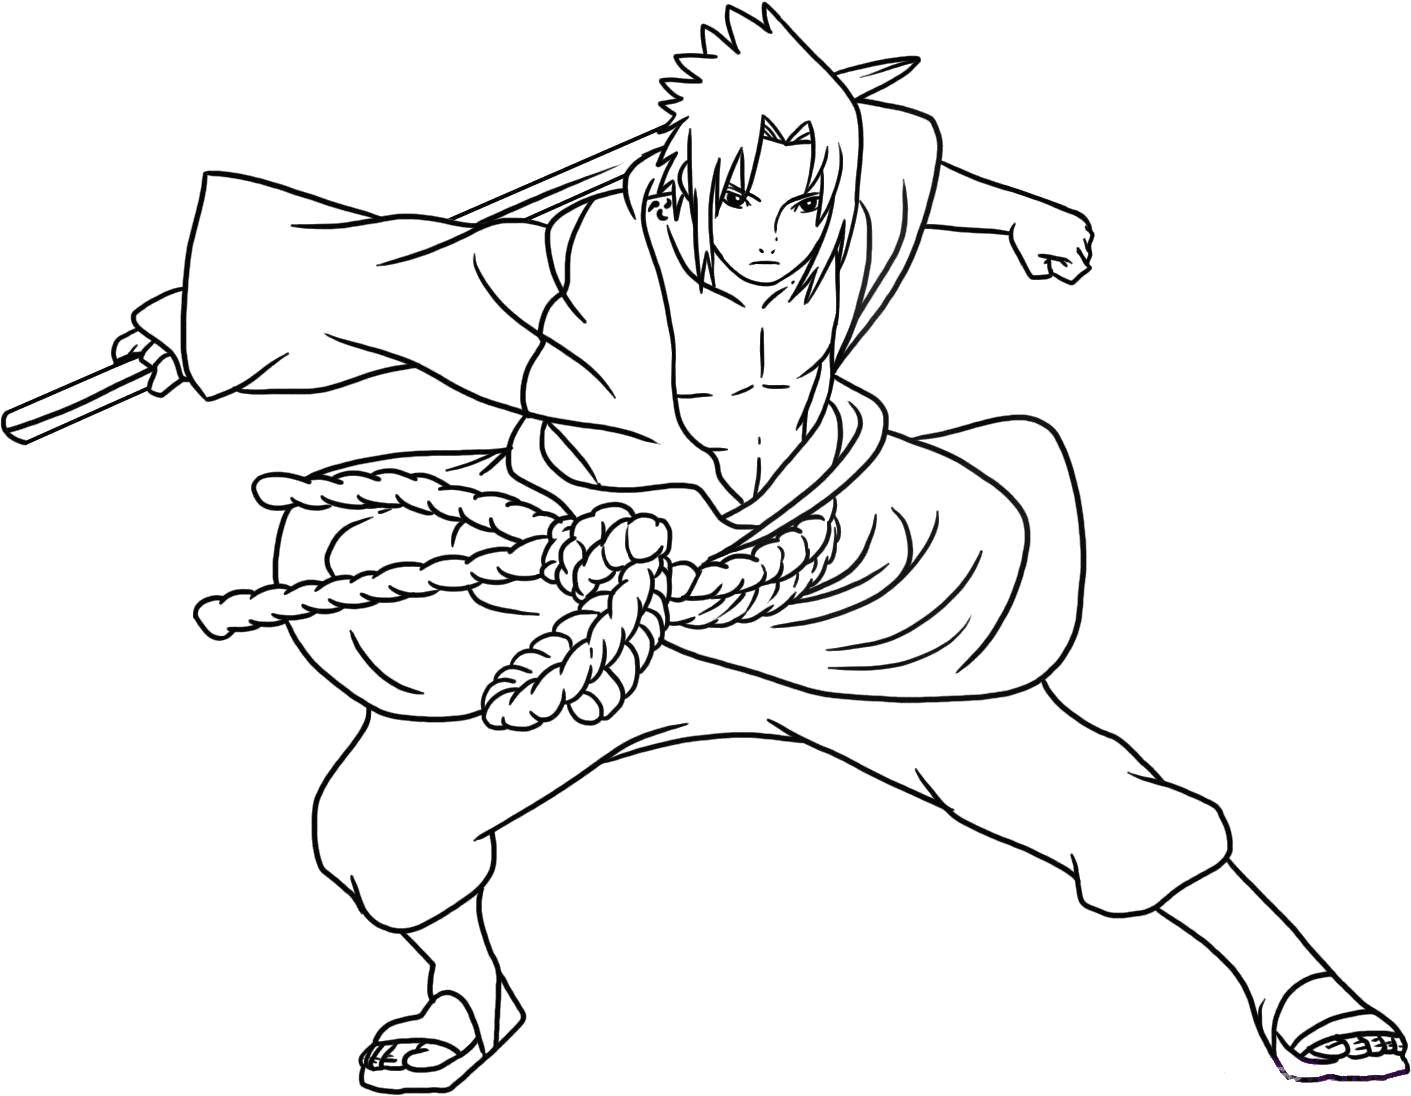 Coloring Sasuke uchia. Category anime. Tags:  Naruto , Sasuke.